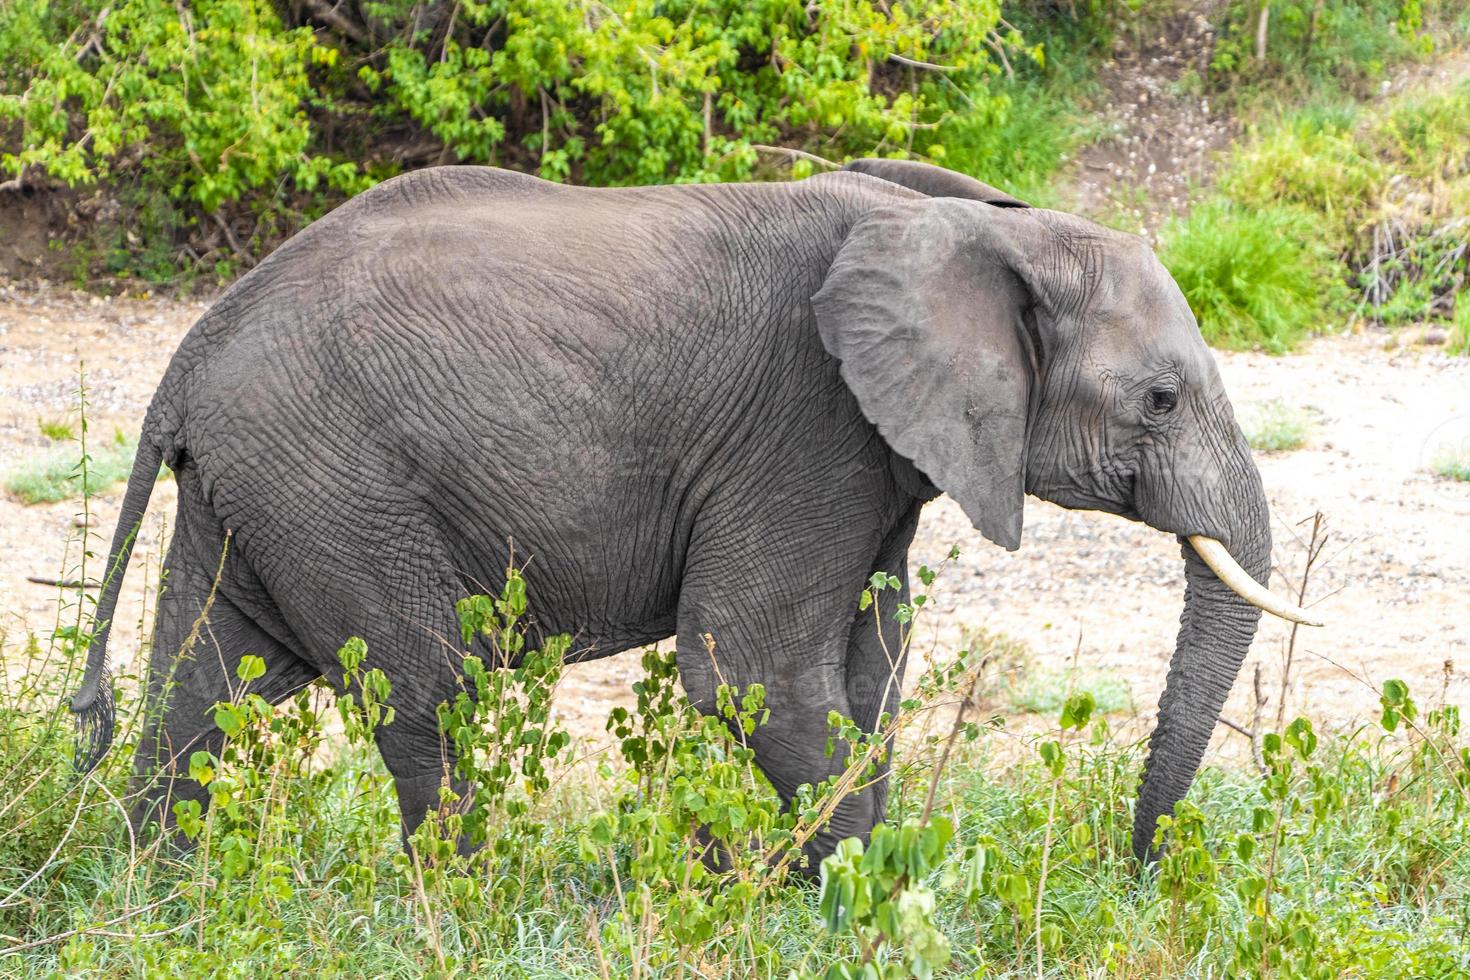 Big Five African Elephant Parc National Kruger Safari Afrique du Sud. photo